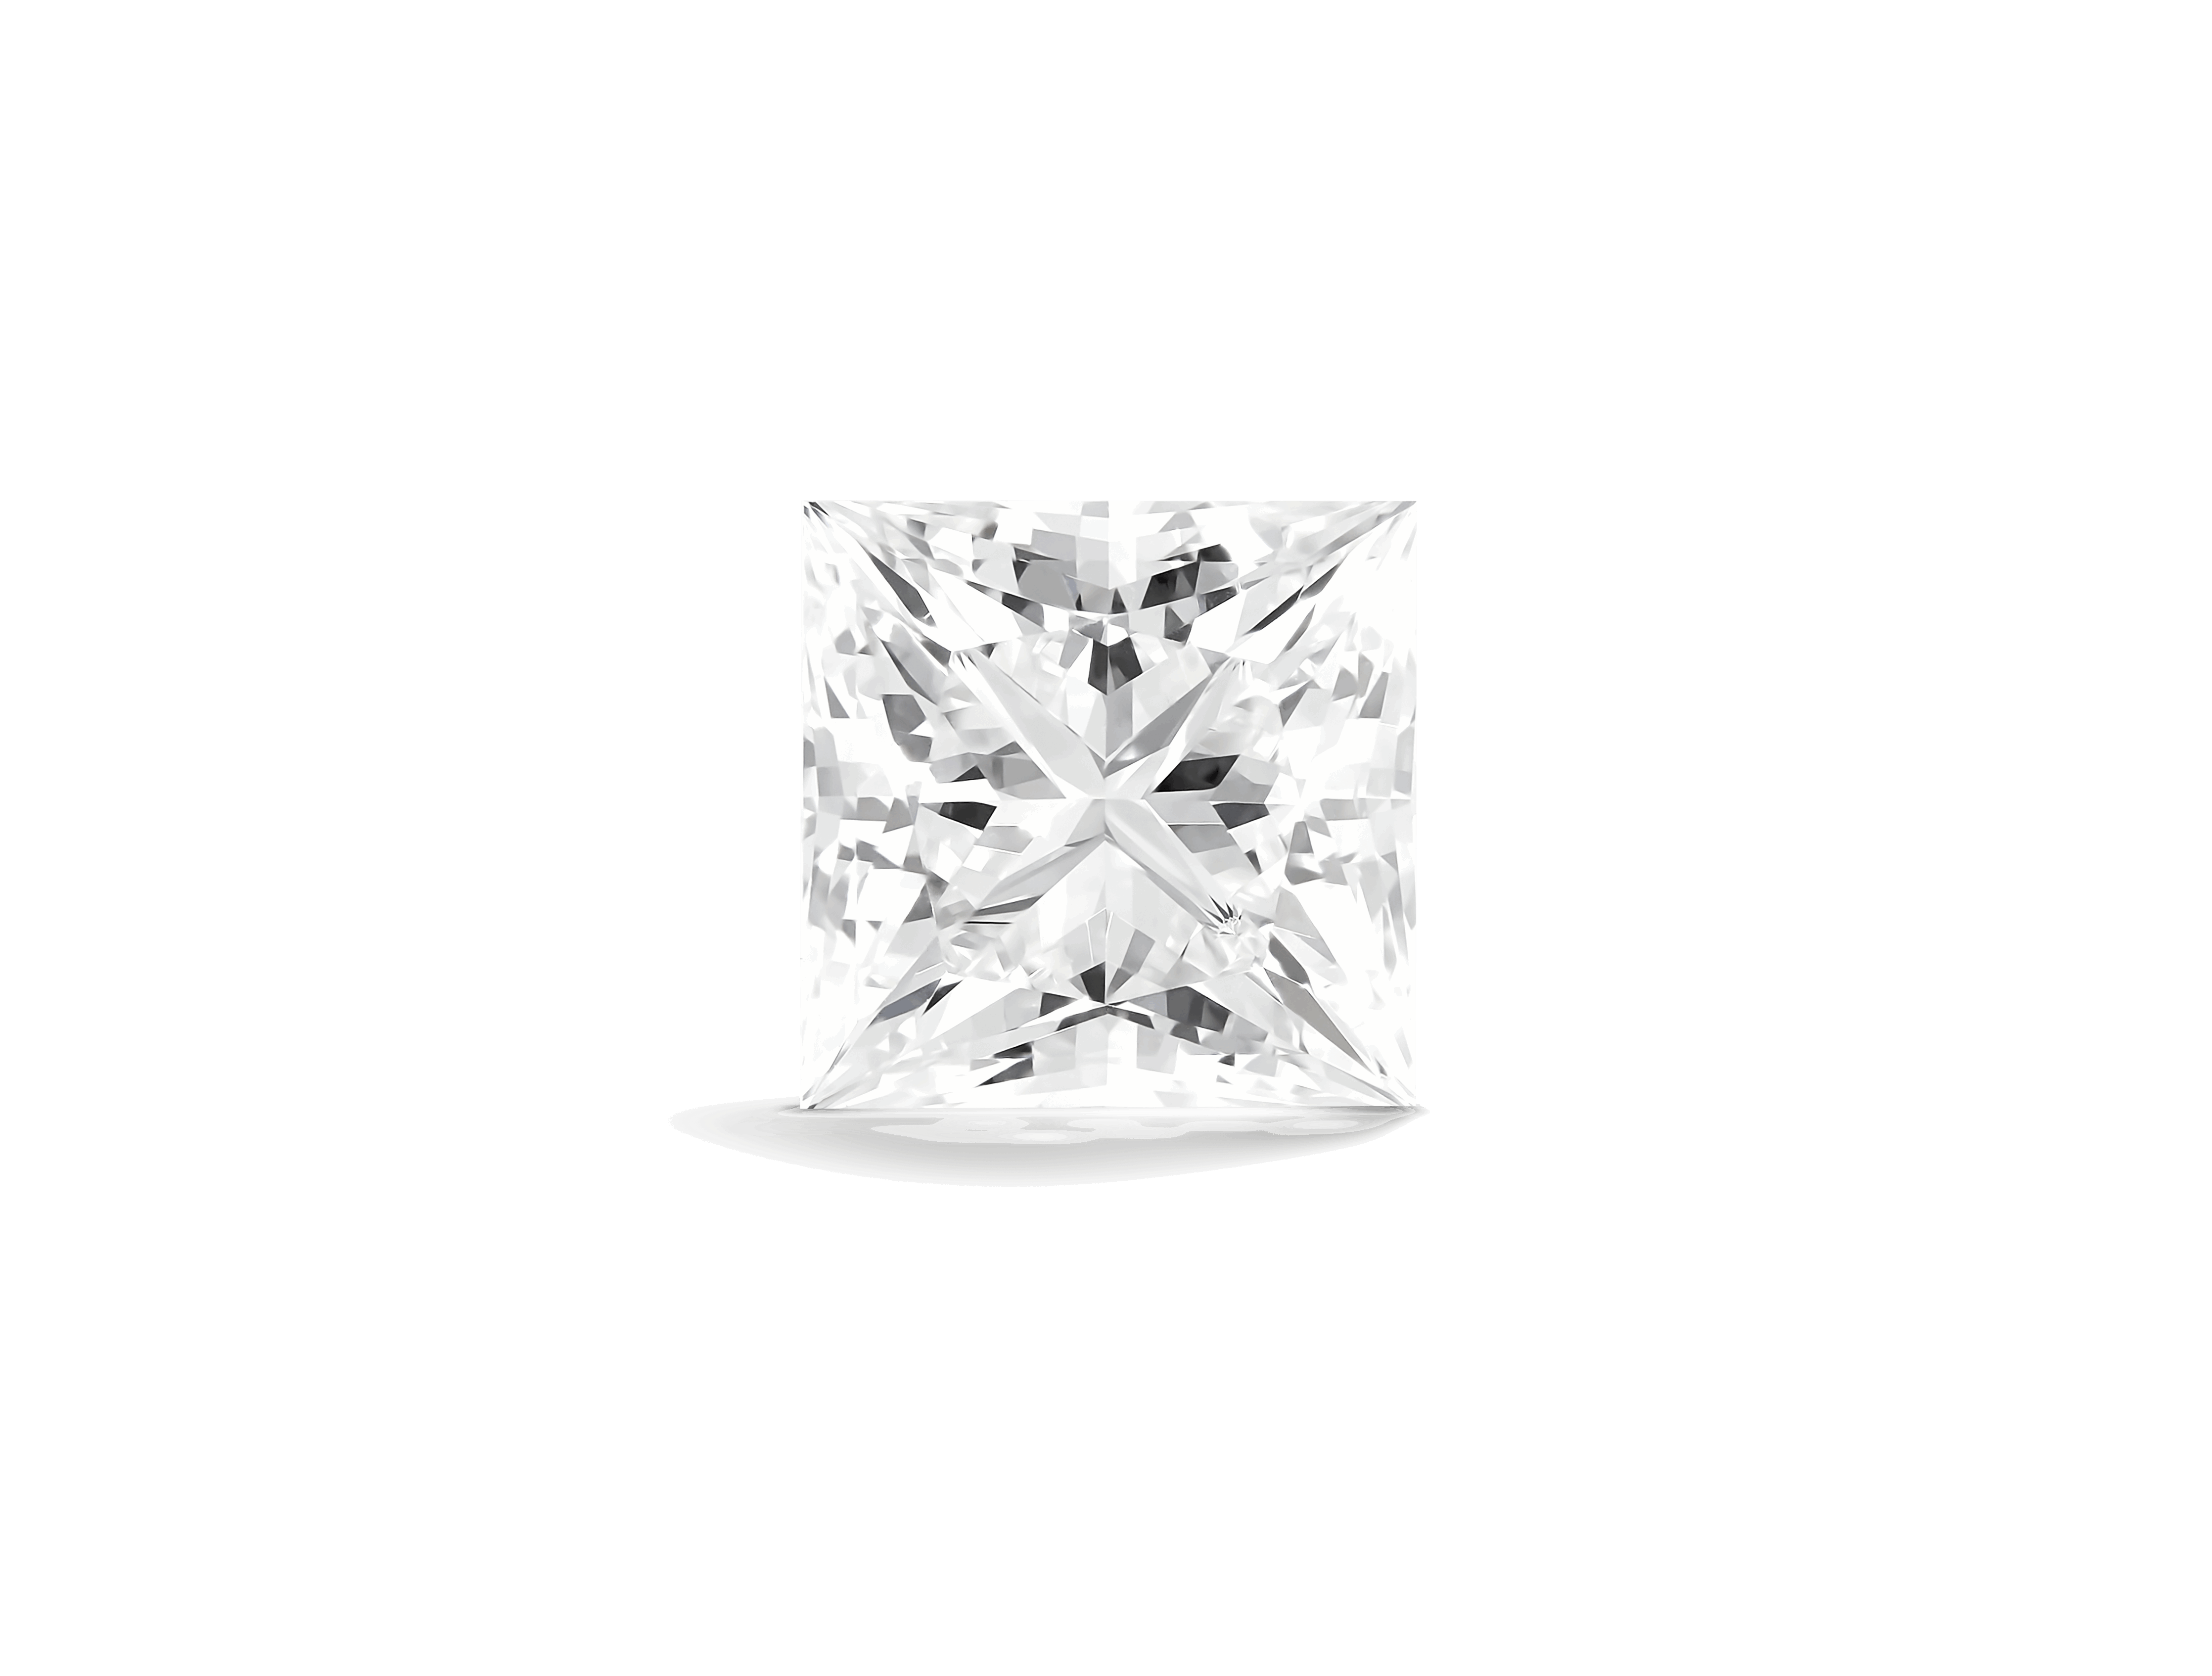 Overview of 3 carat princess cut diamond